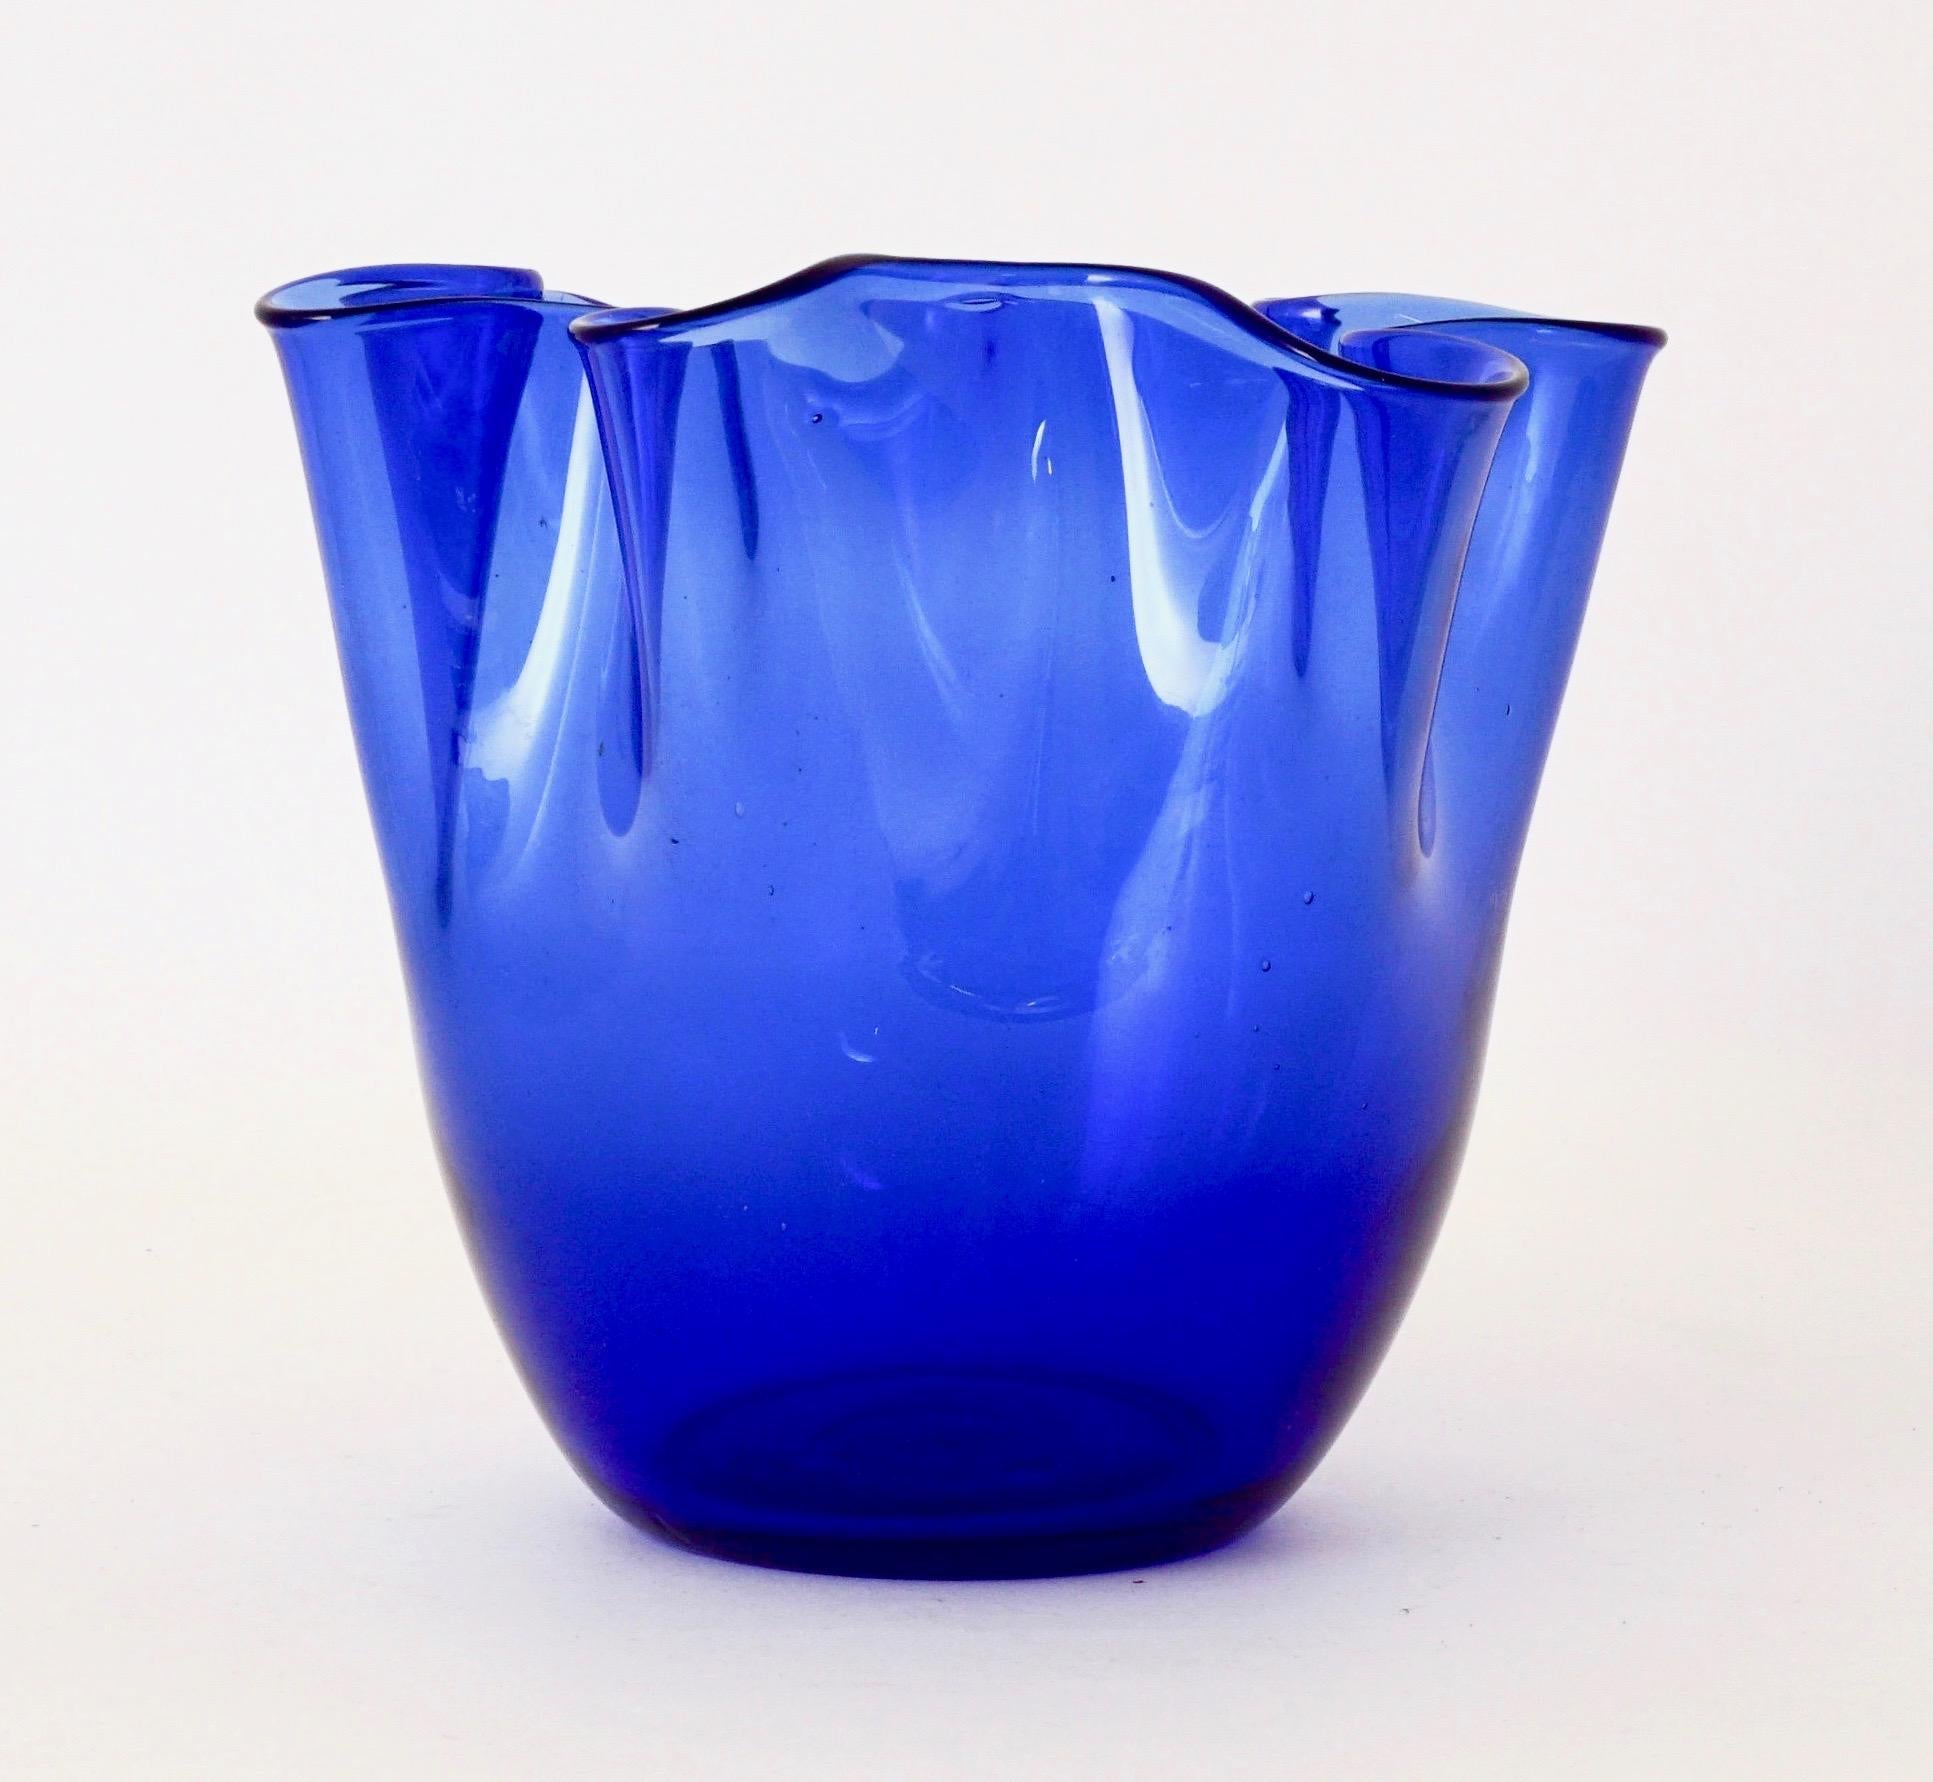 Vintage hand blown Venini handkerchief vase, circa 1960
Murano, Italy. Cobalt blue, this beautiful vase measures 9.5